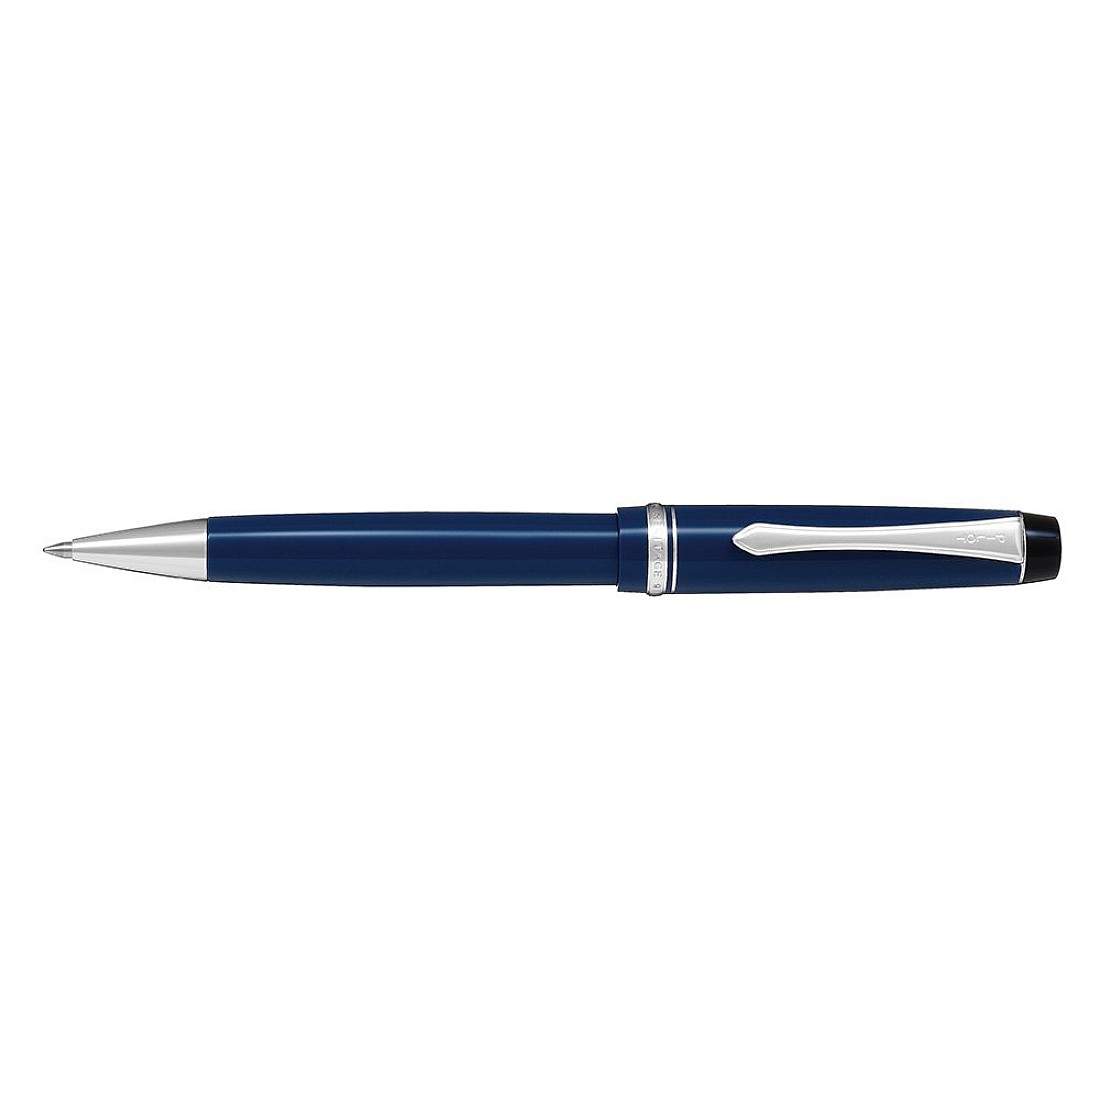 Pilot Heritage 91 Navy Blue Ballpoint pen